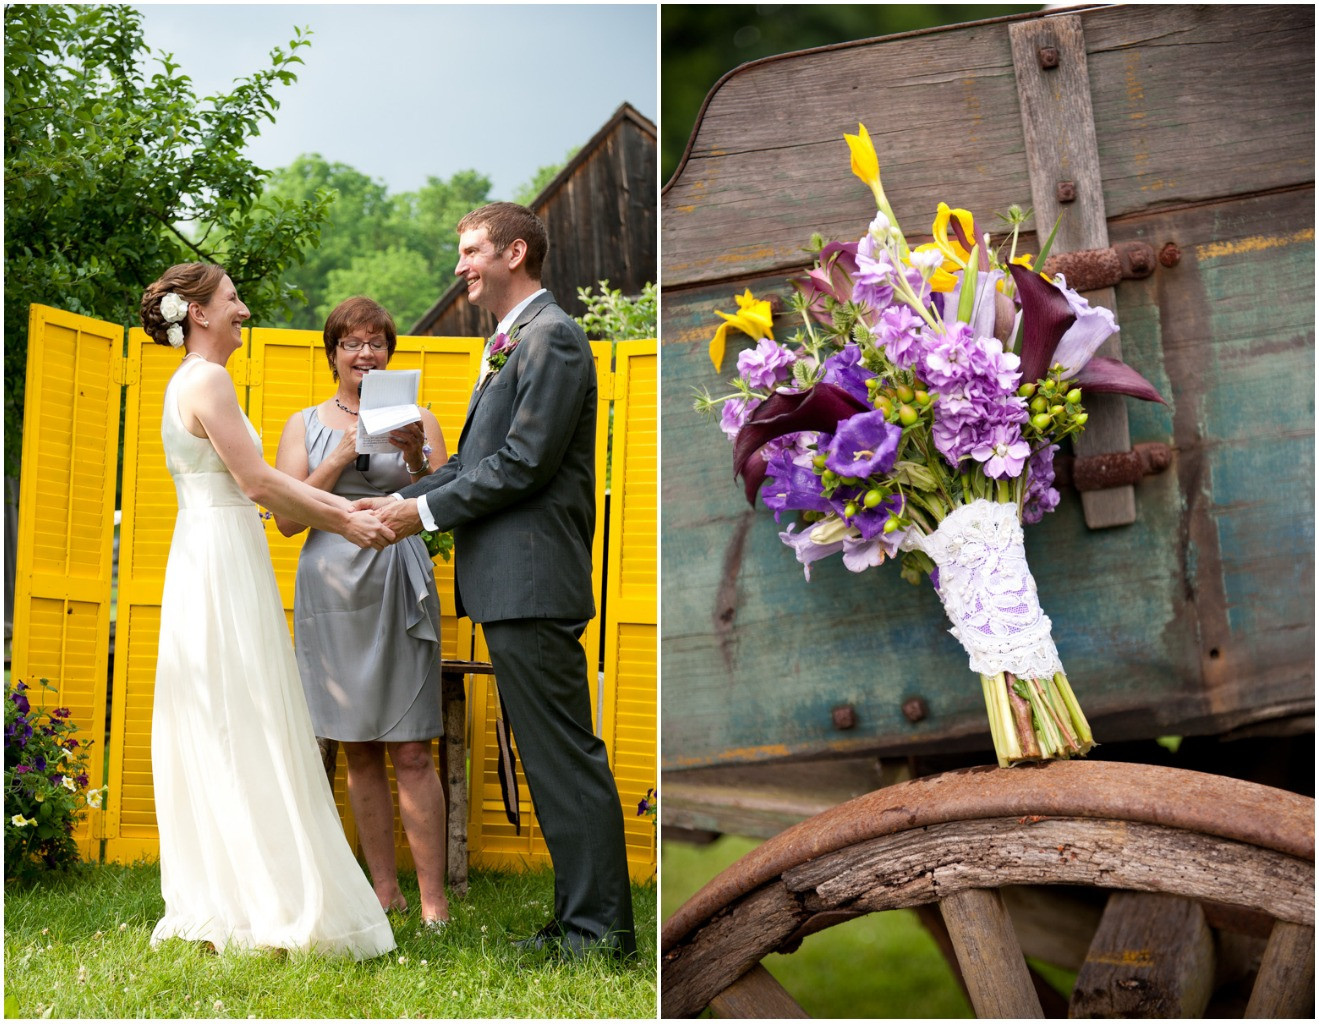 DIY Backyard Wedding Ideas
 Do It Yourself Style Backyard Wedding Rustic Wedding Chic